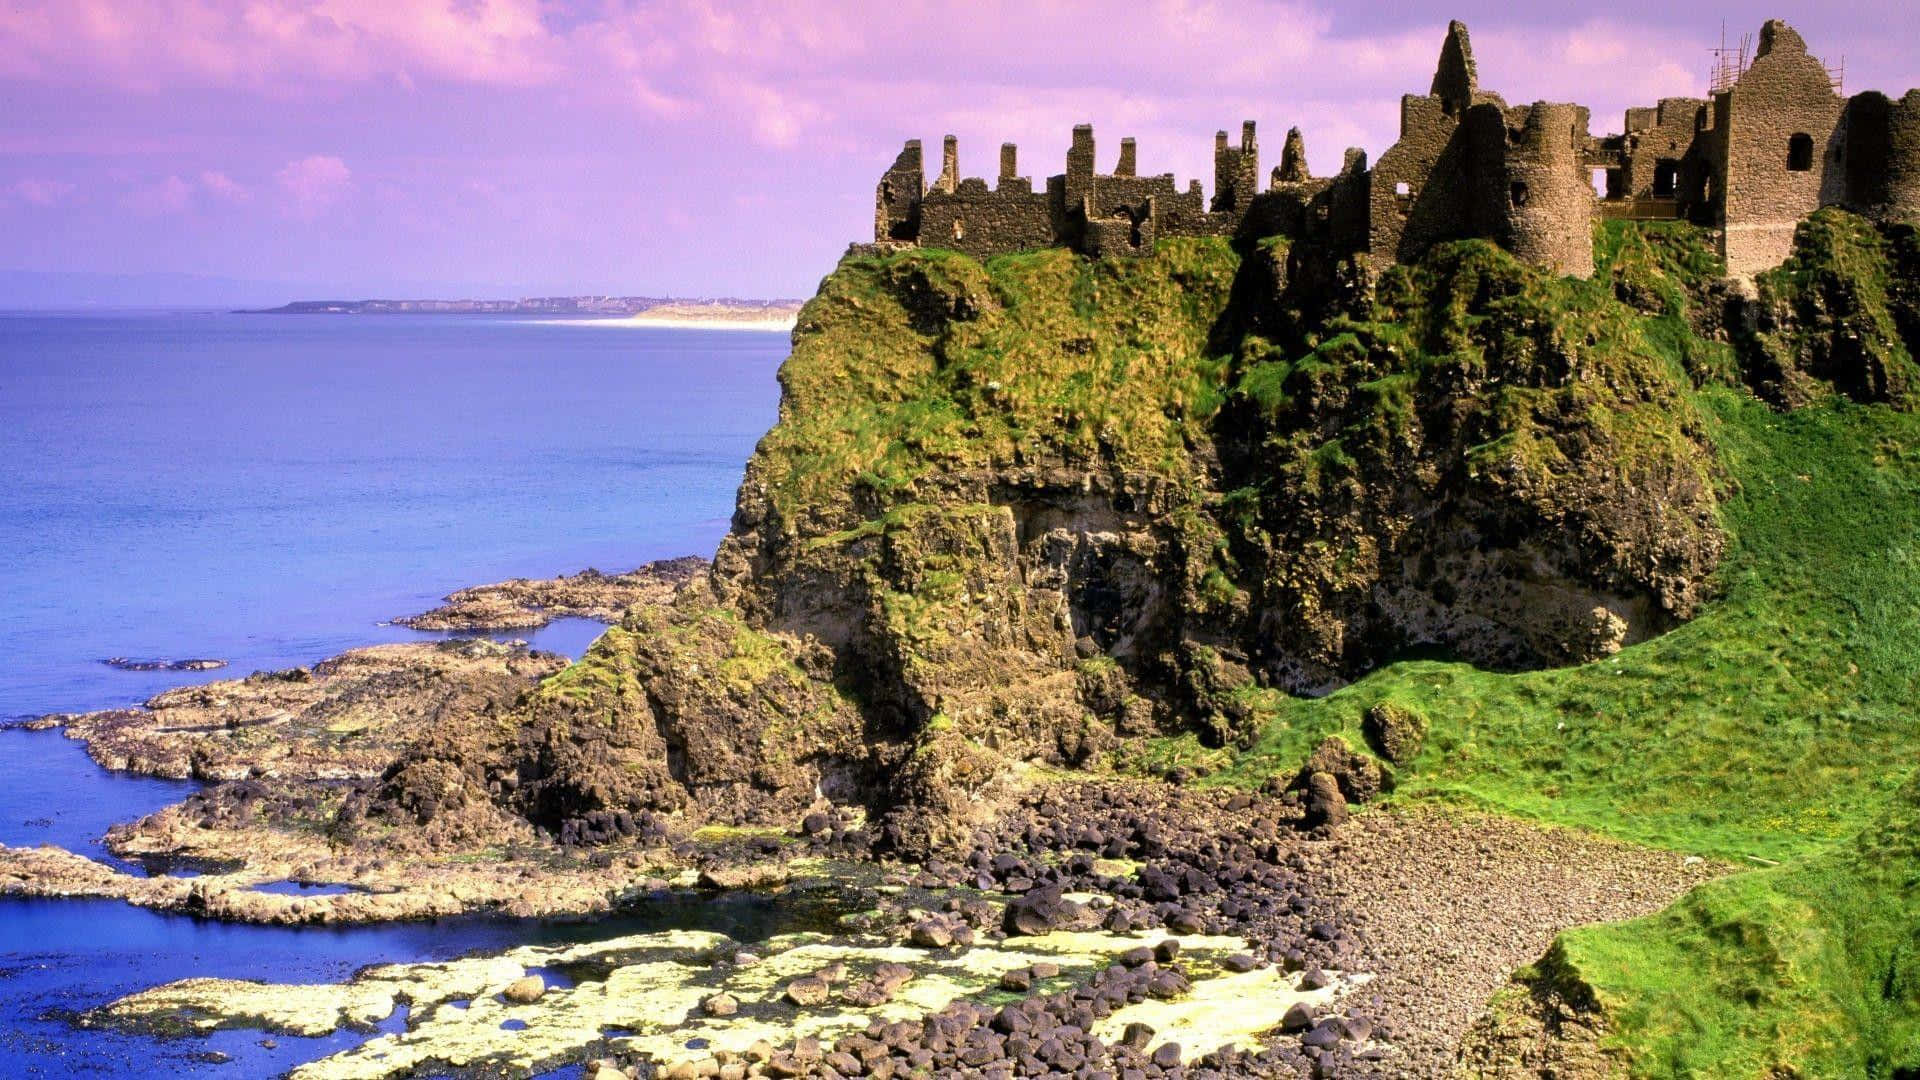 Old Castle On Cliff Ireland Desktop Wallpaper